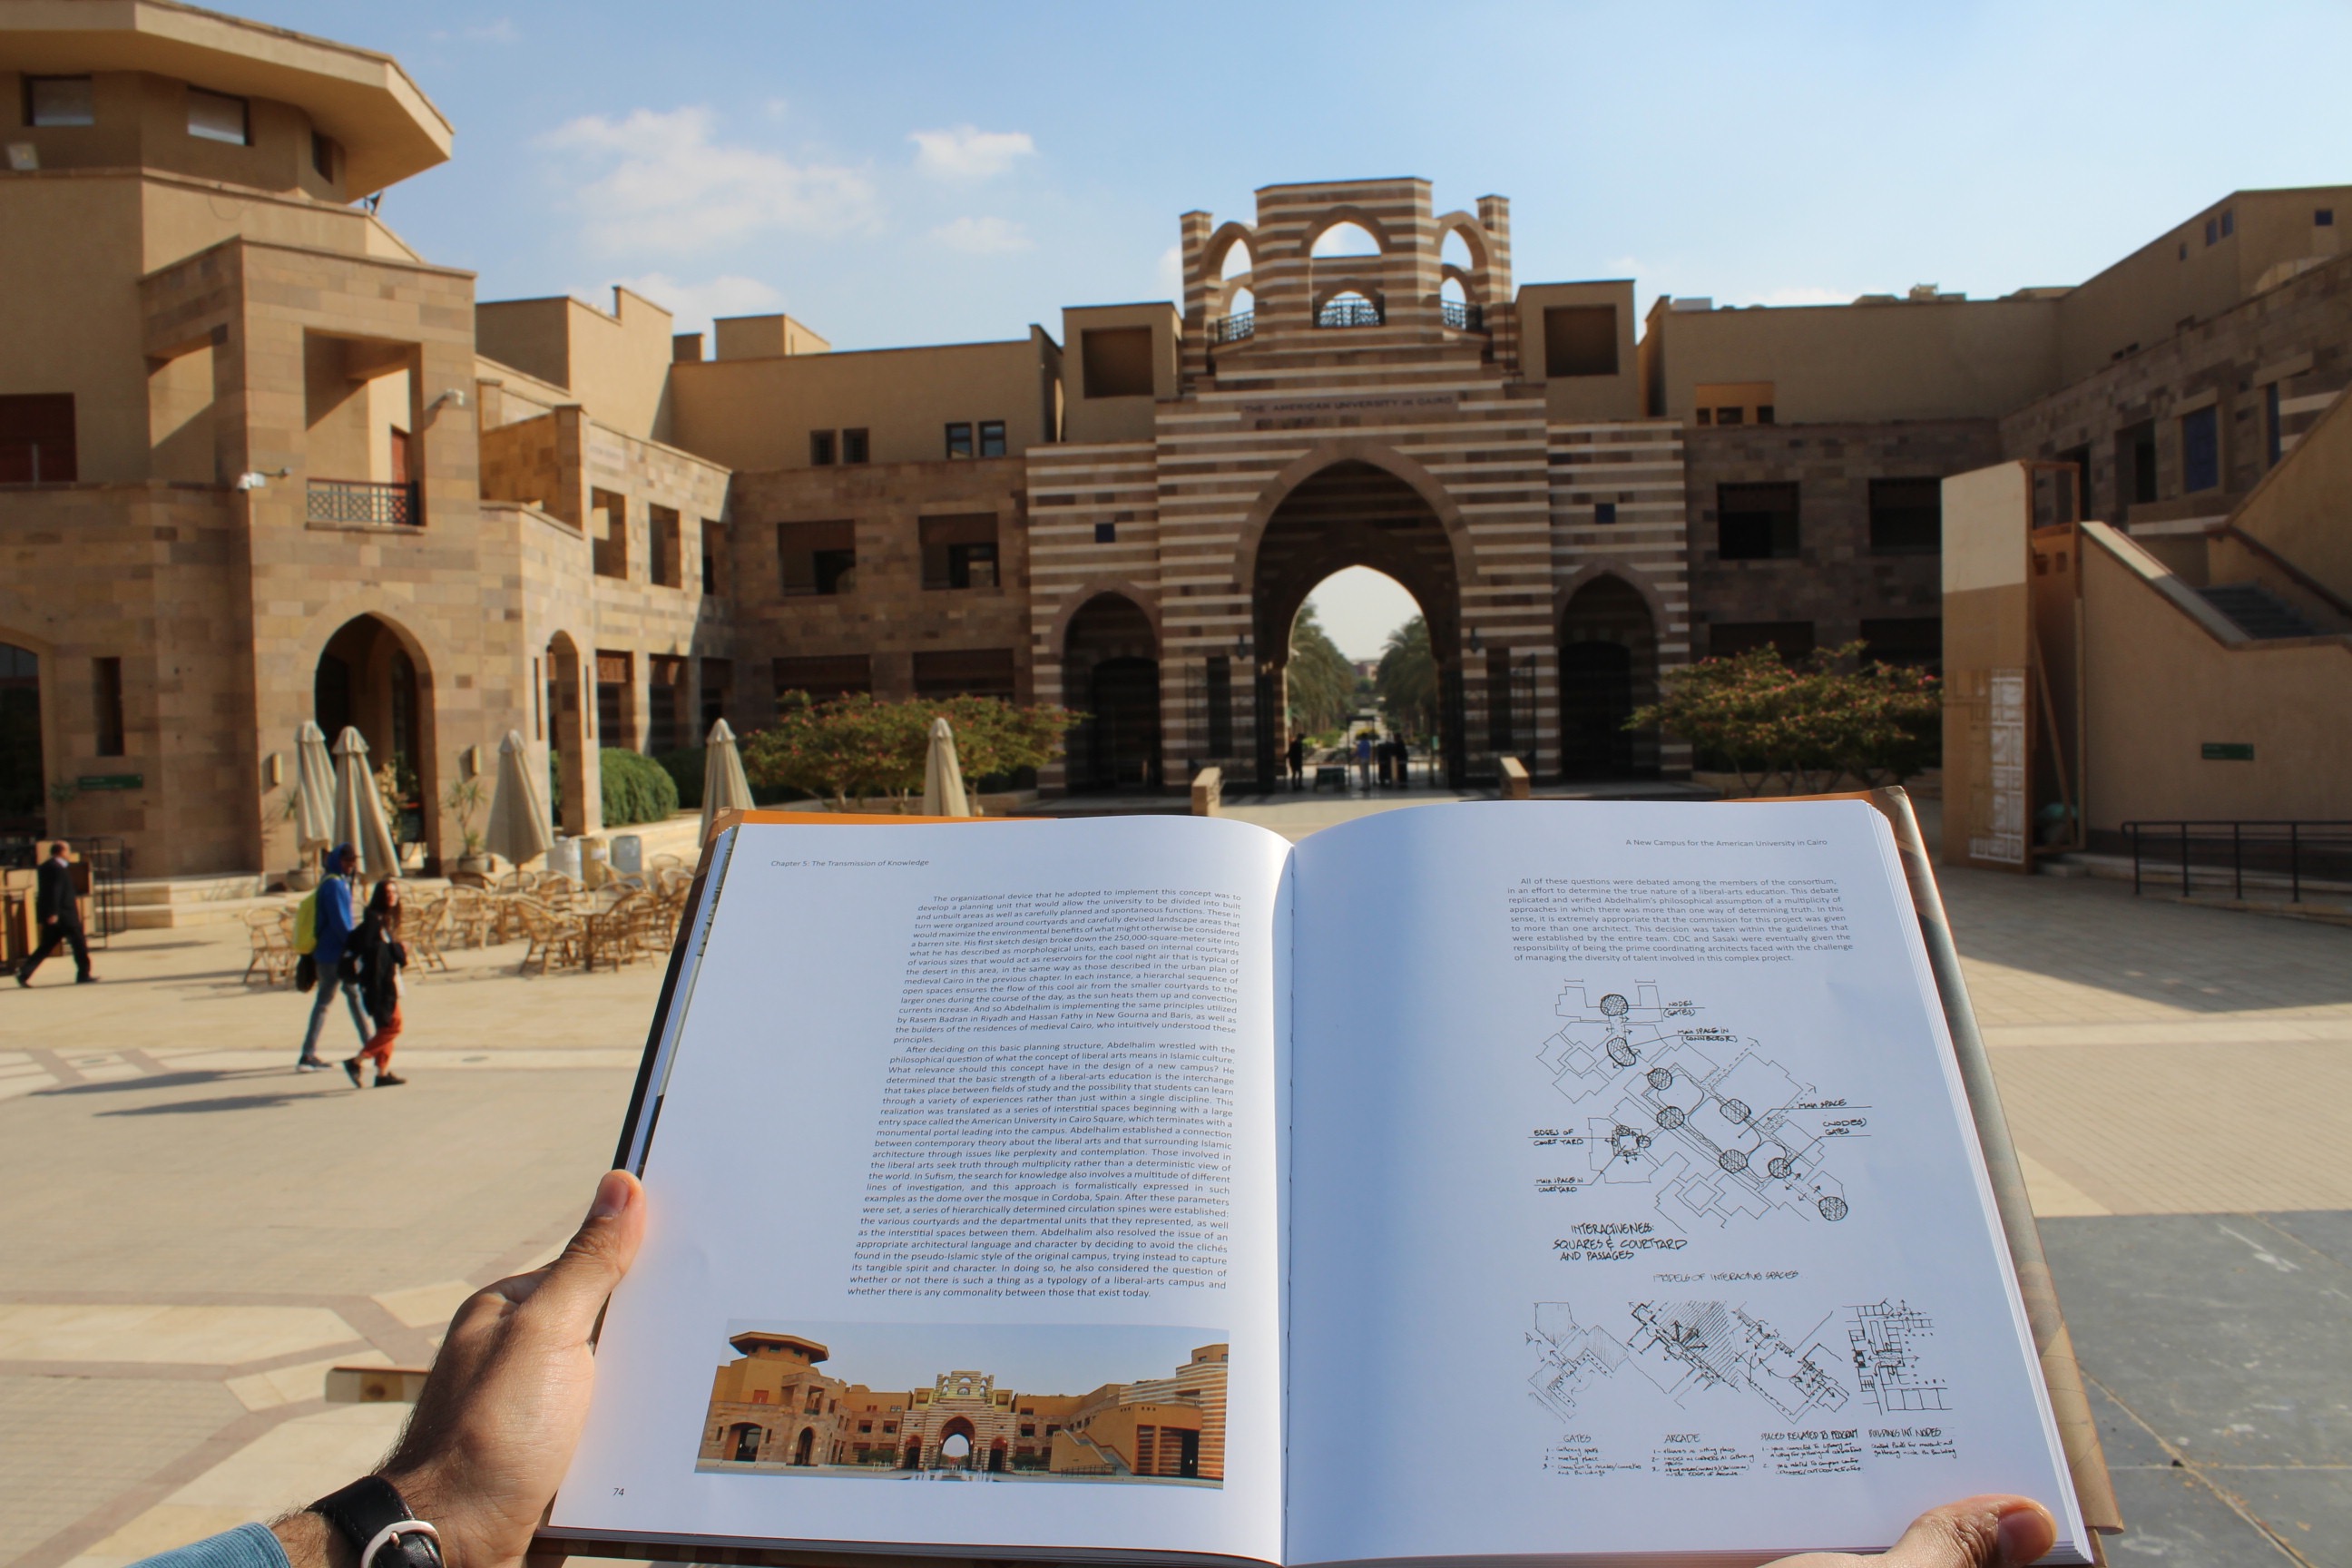 abdelhalim architect book